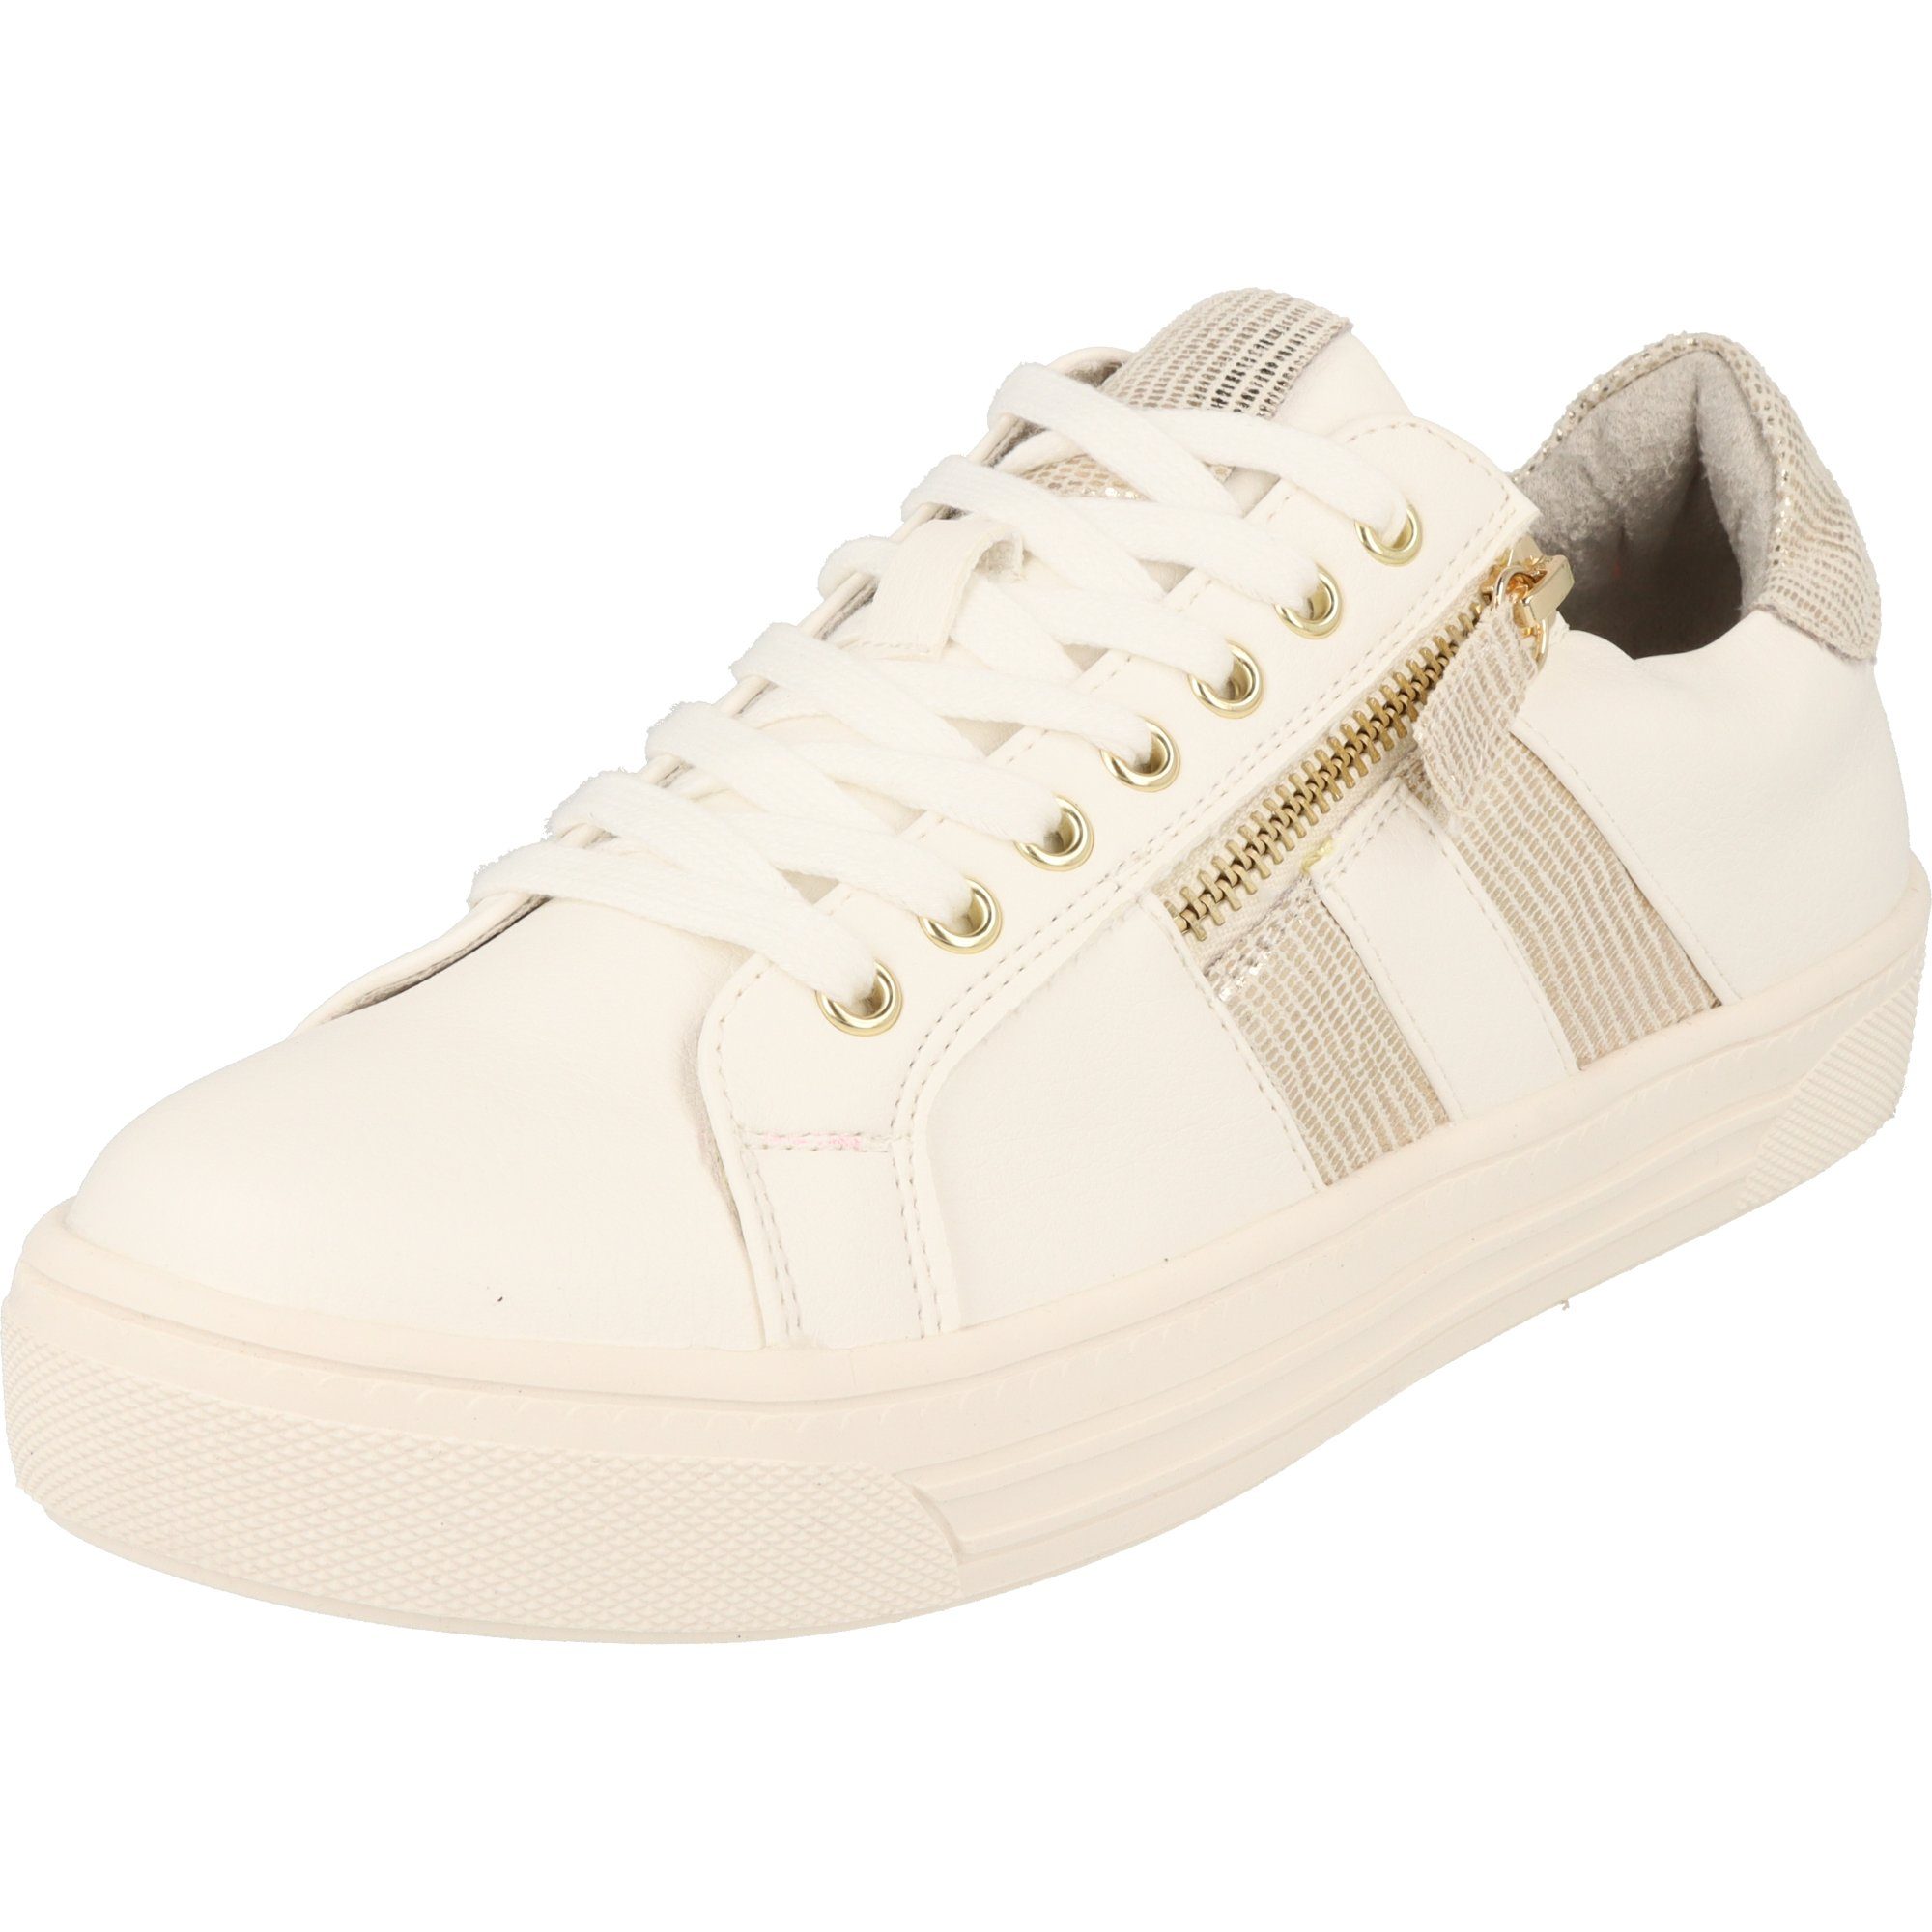 Jane Klain Damen Schuhe Weiß/Gold 236-003 Halbschuhe Schnürschuh Sneaker